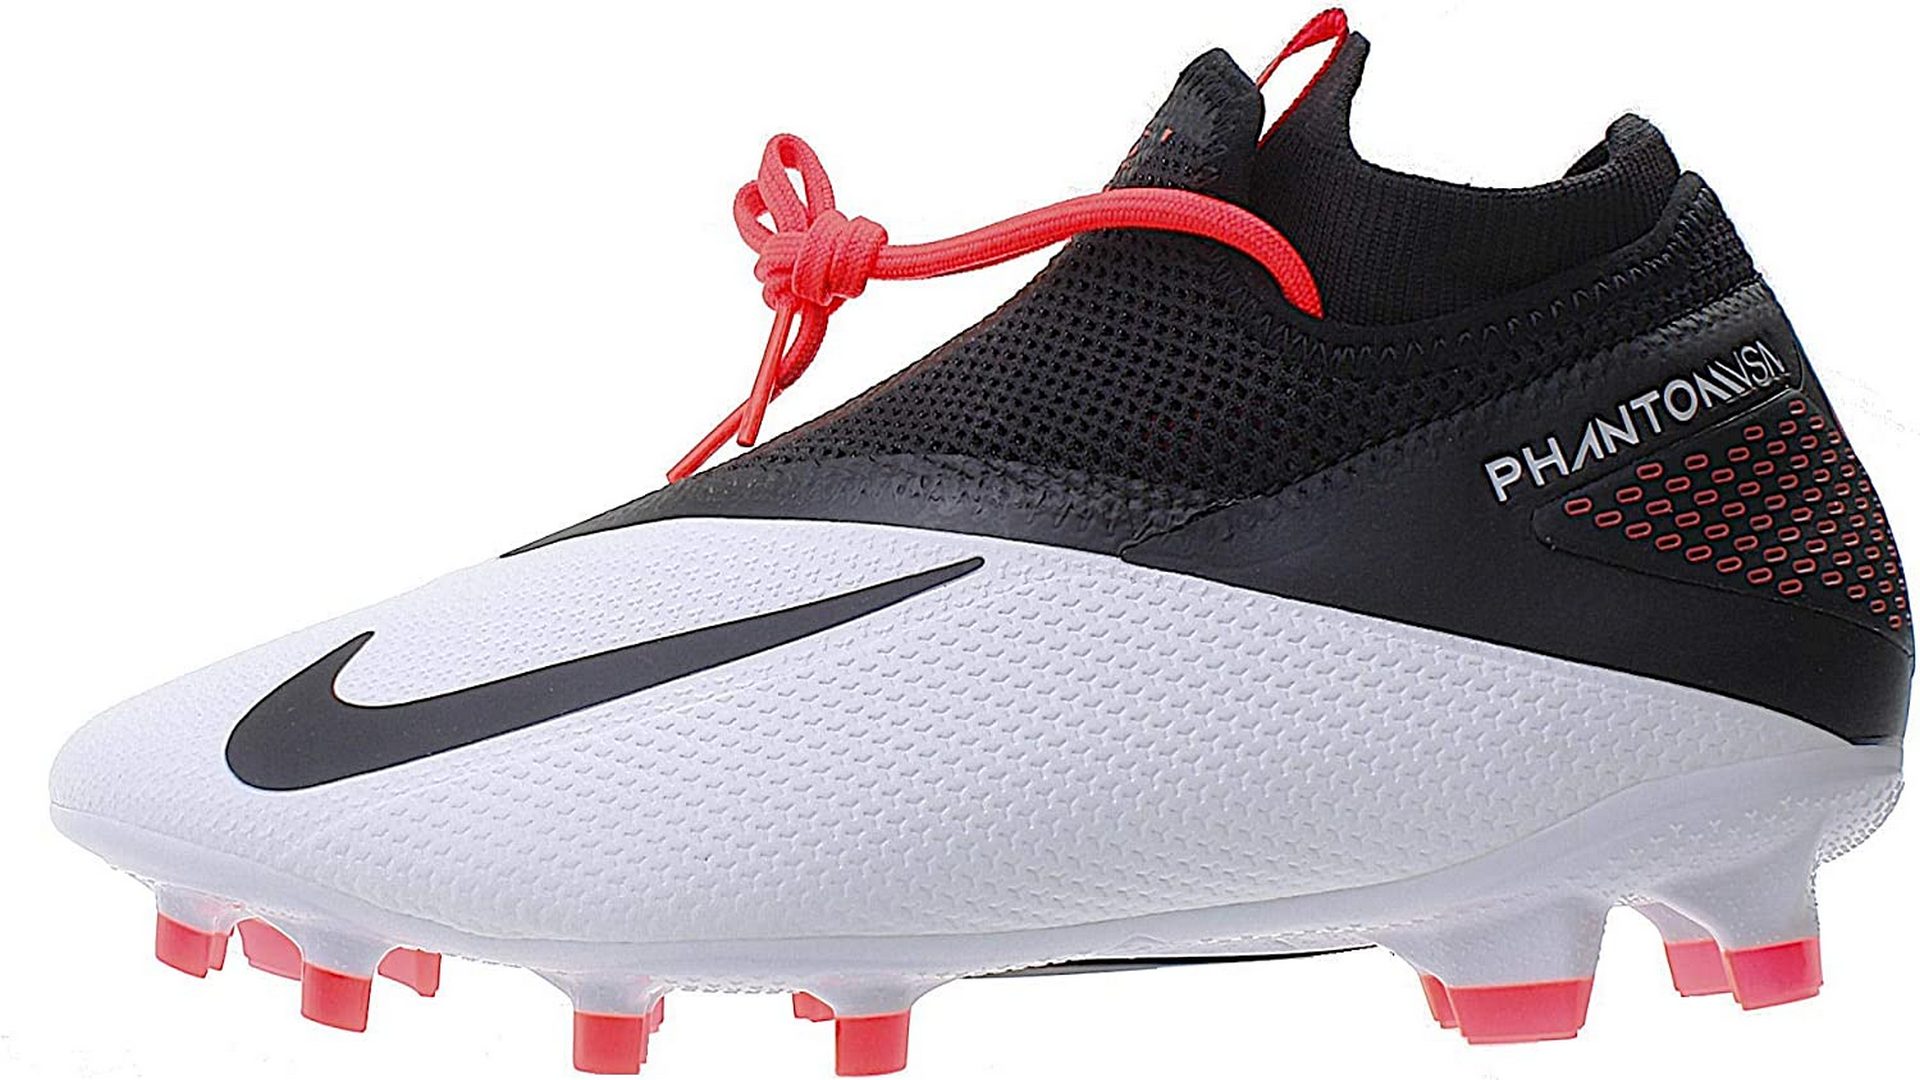 Nike Phantom Vision 2 Pro Dynamic Fit FG Soccer Cleats – $150